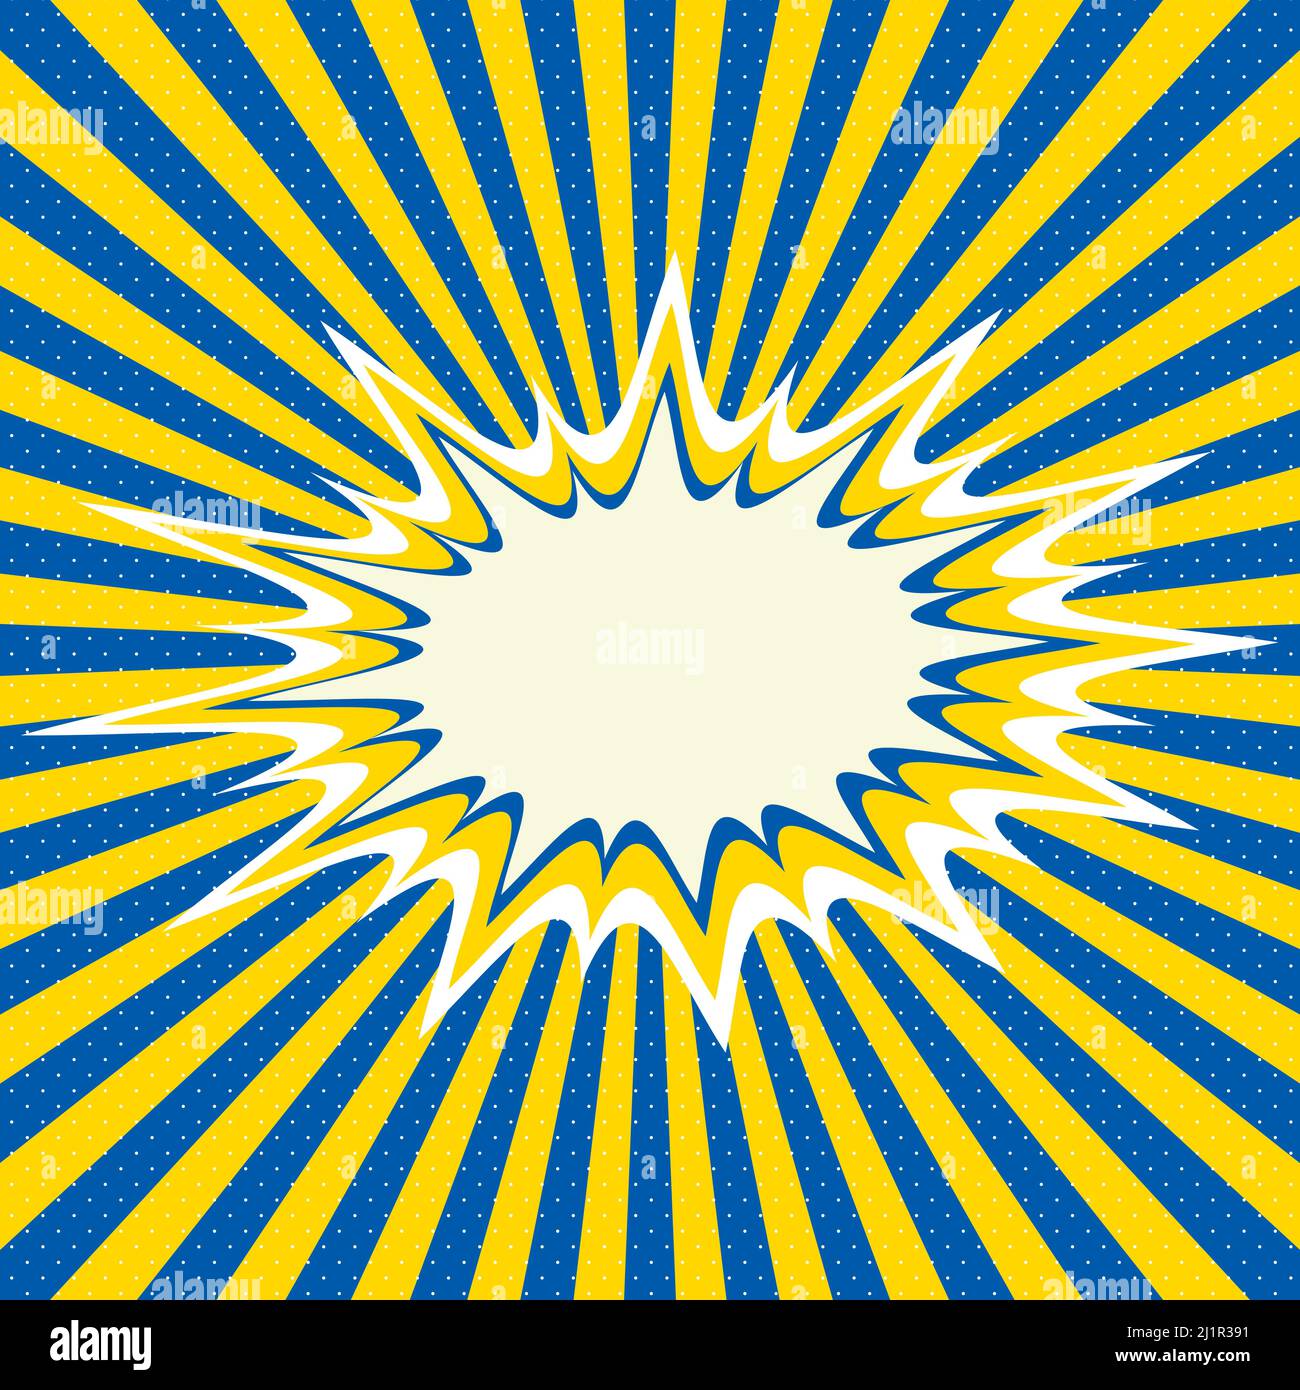 Comic Hintergrund gelb blau ua Strahlen Flagge Farbe ukraine, Cartoon Explosion, Blitz Halbton Punkte Stock Vektor